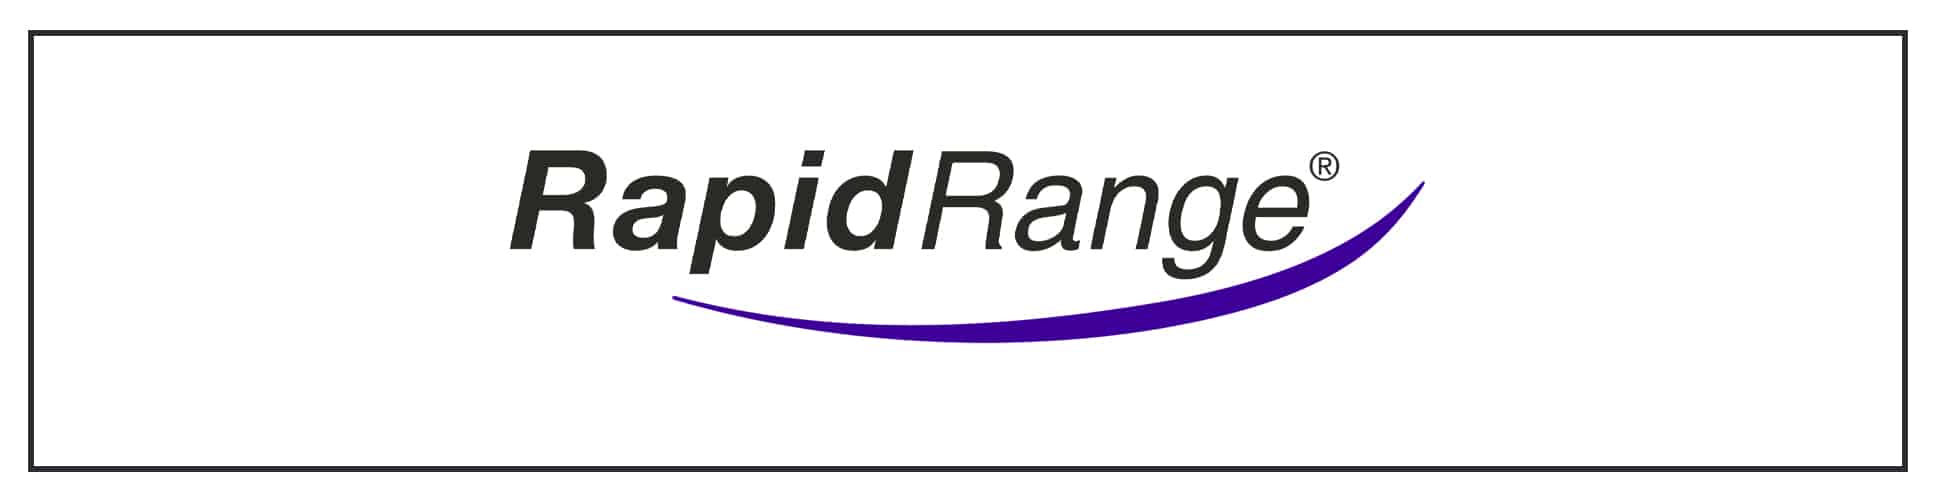 Rapid range logo on a white background.